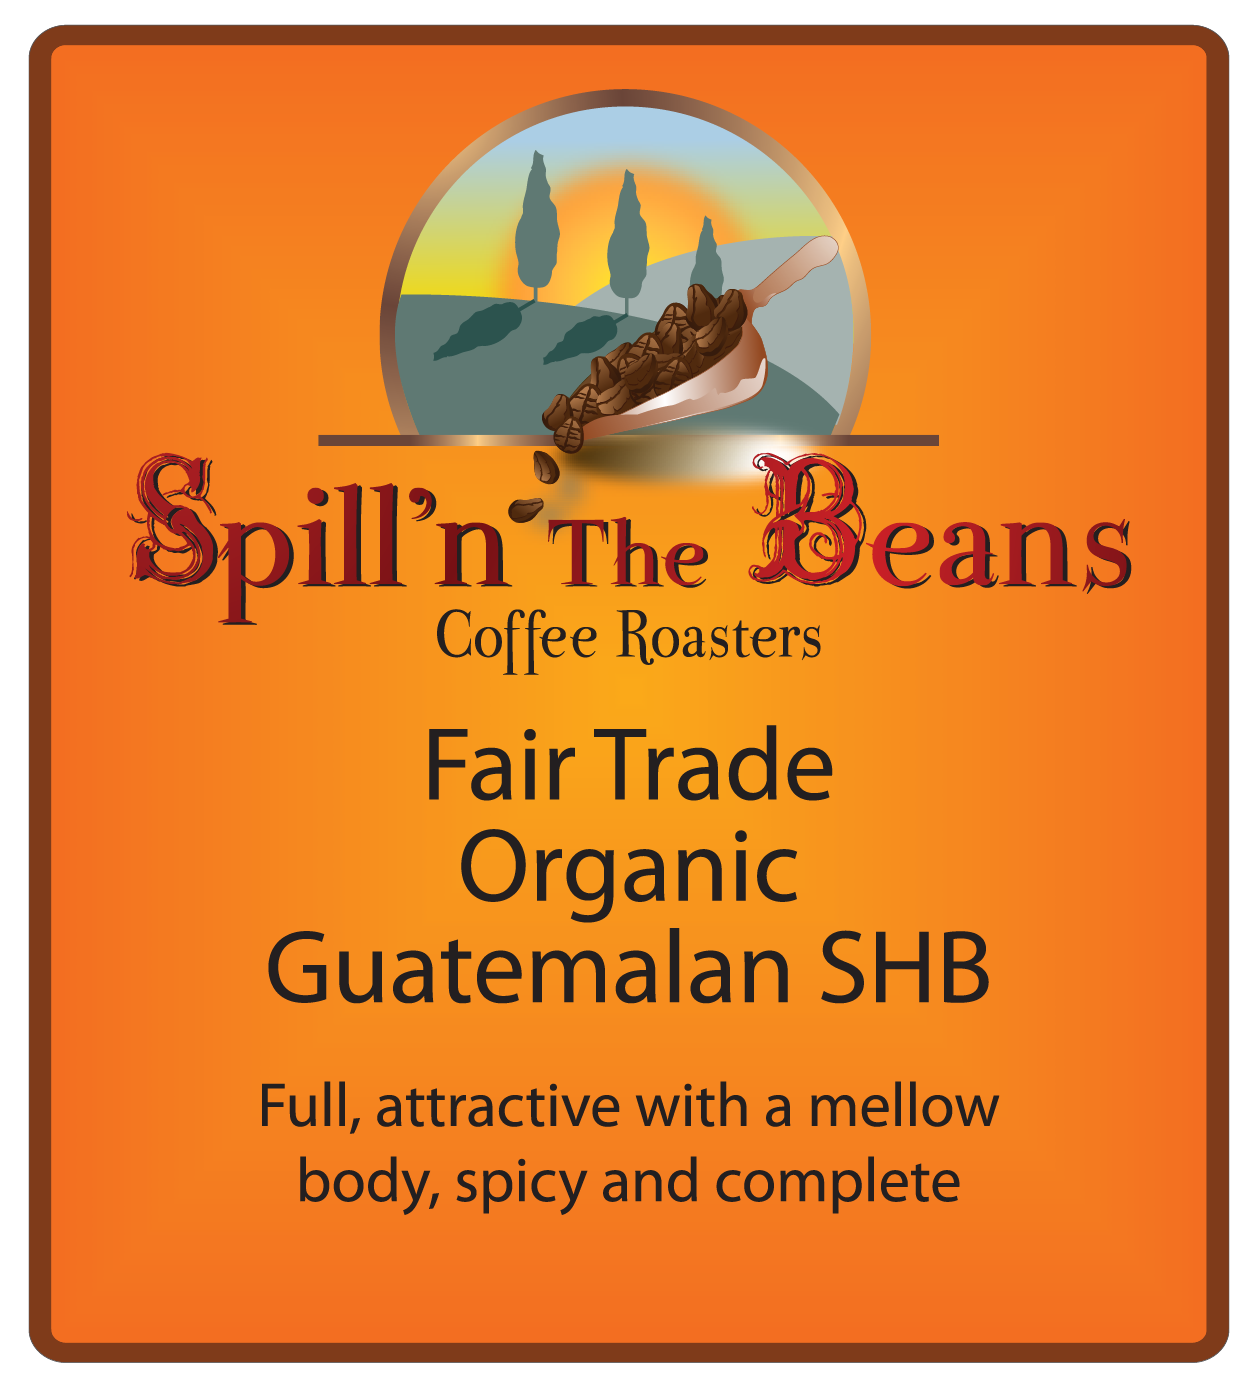 Fair Trade Organic Guatemalan SHB